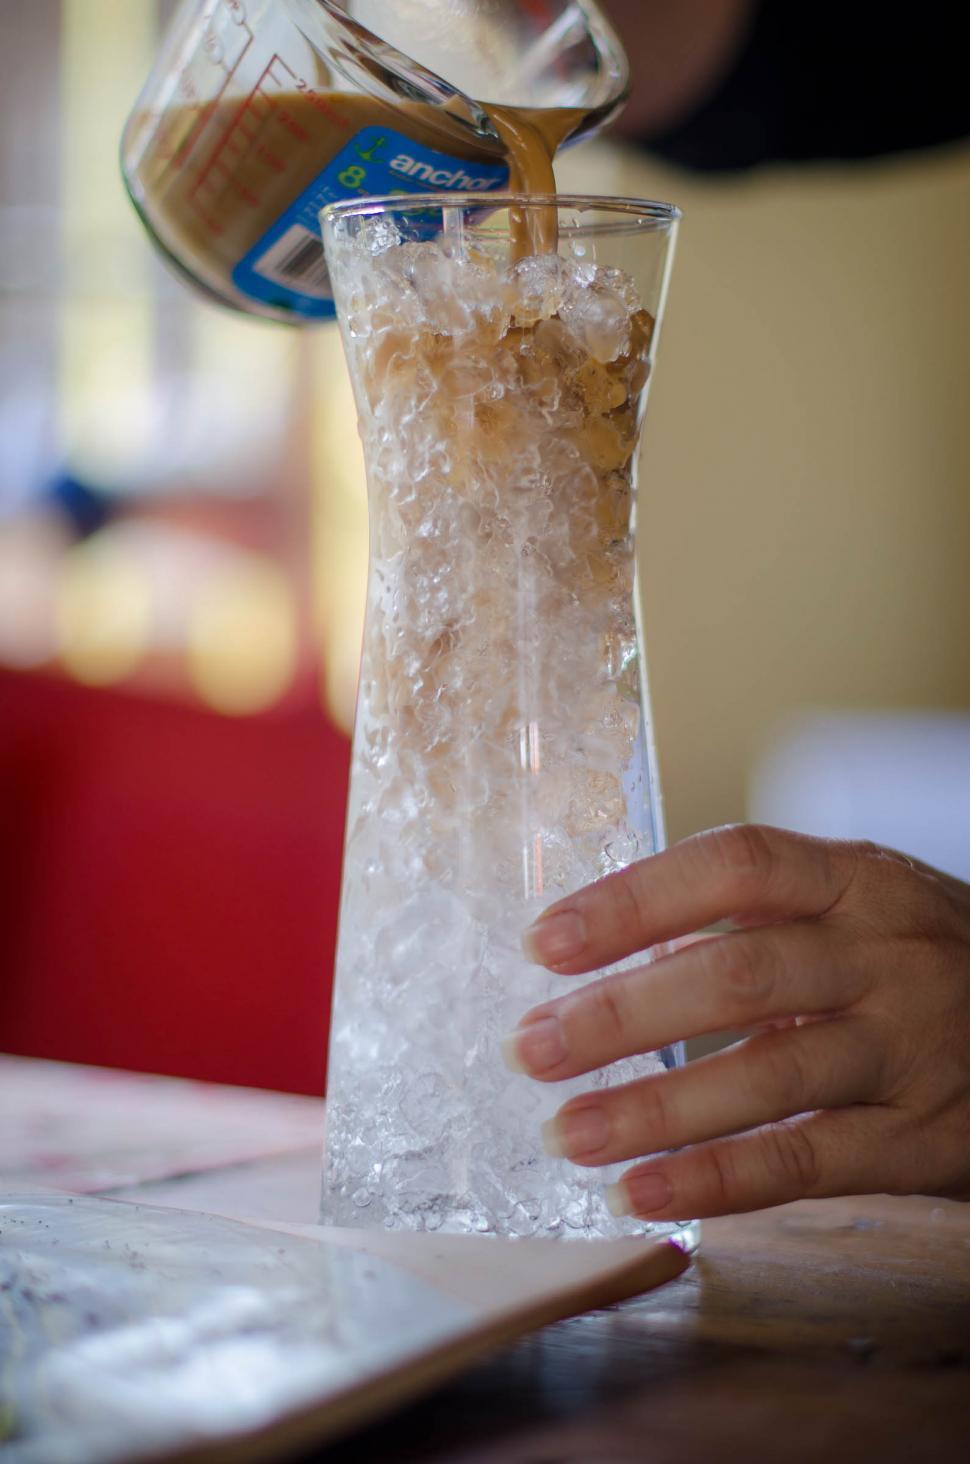 Free Image of Ice Coffee Making 